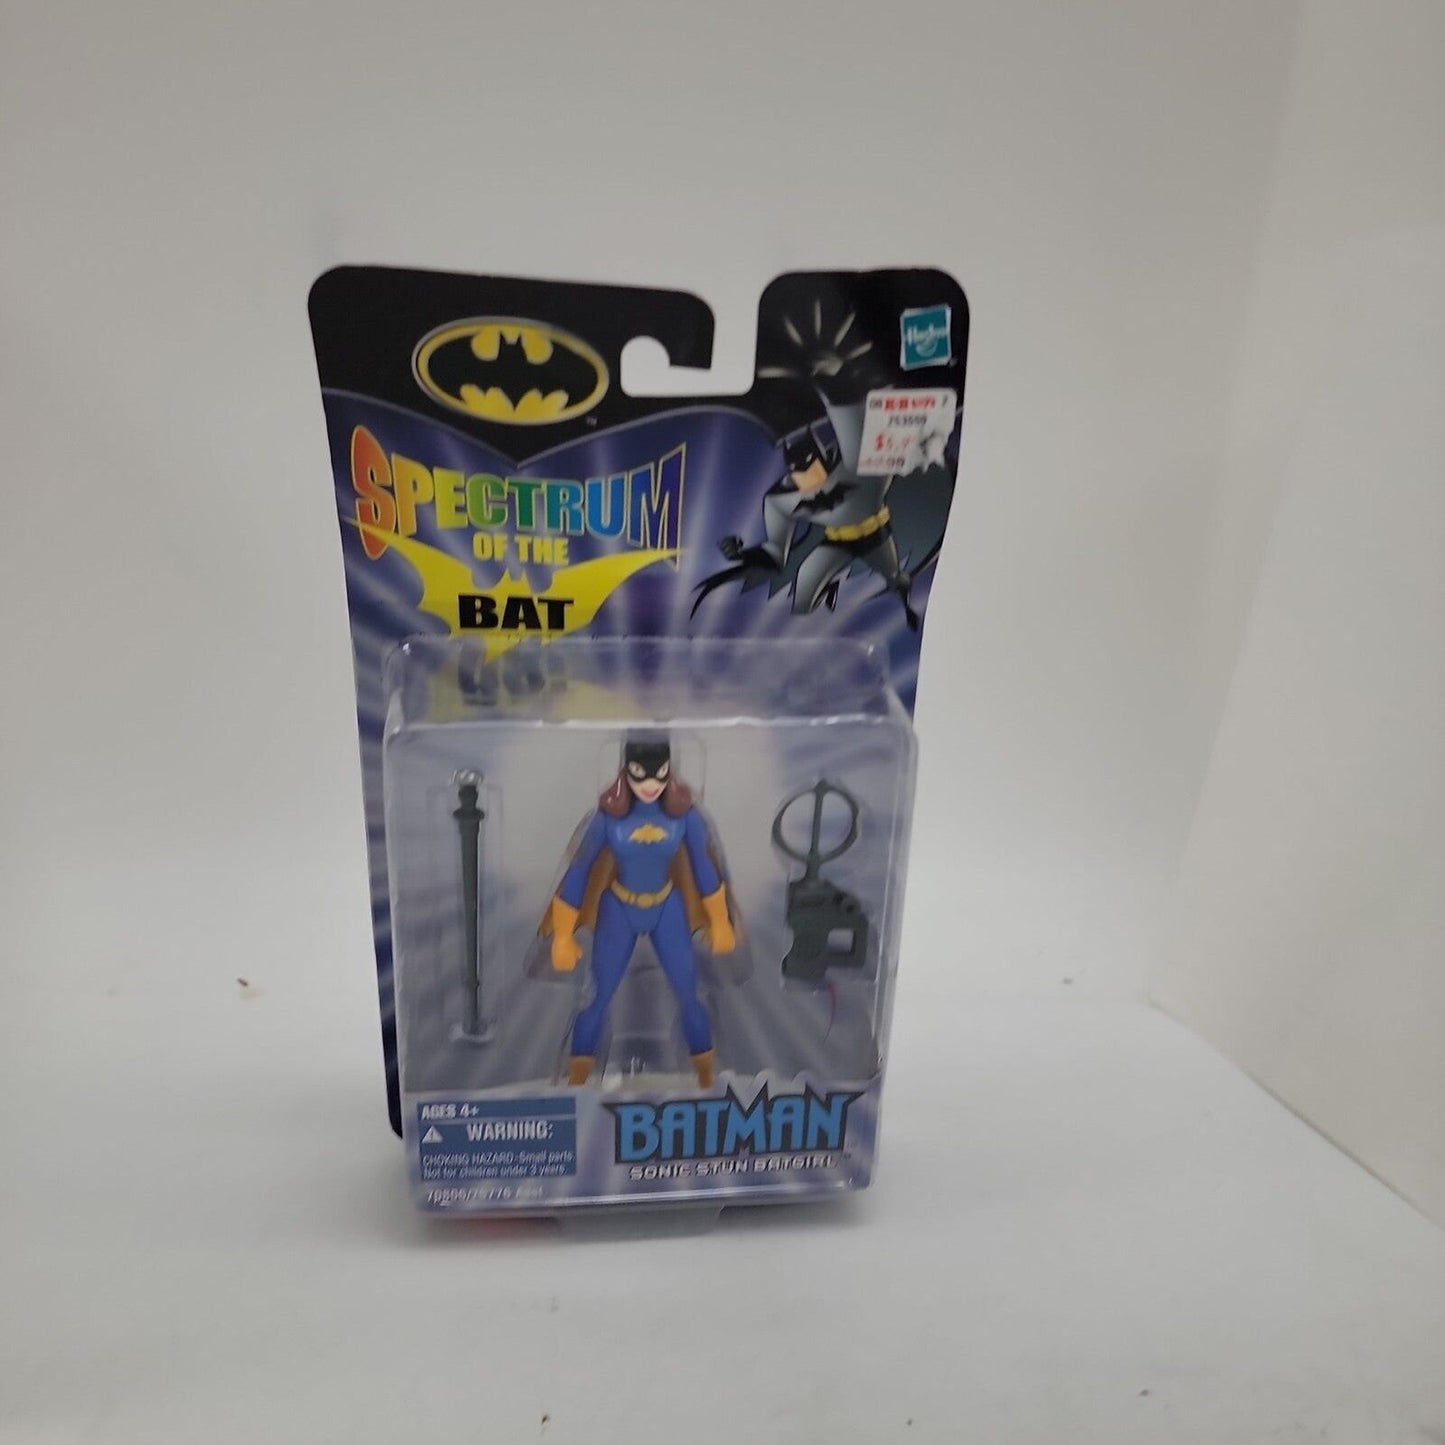 Spectrum of the Bat Batman Sonic Stun Batgirl